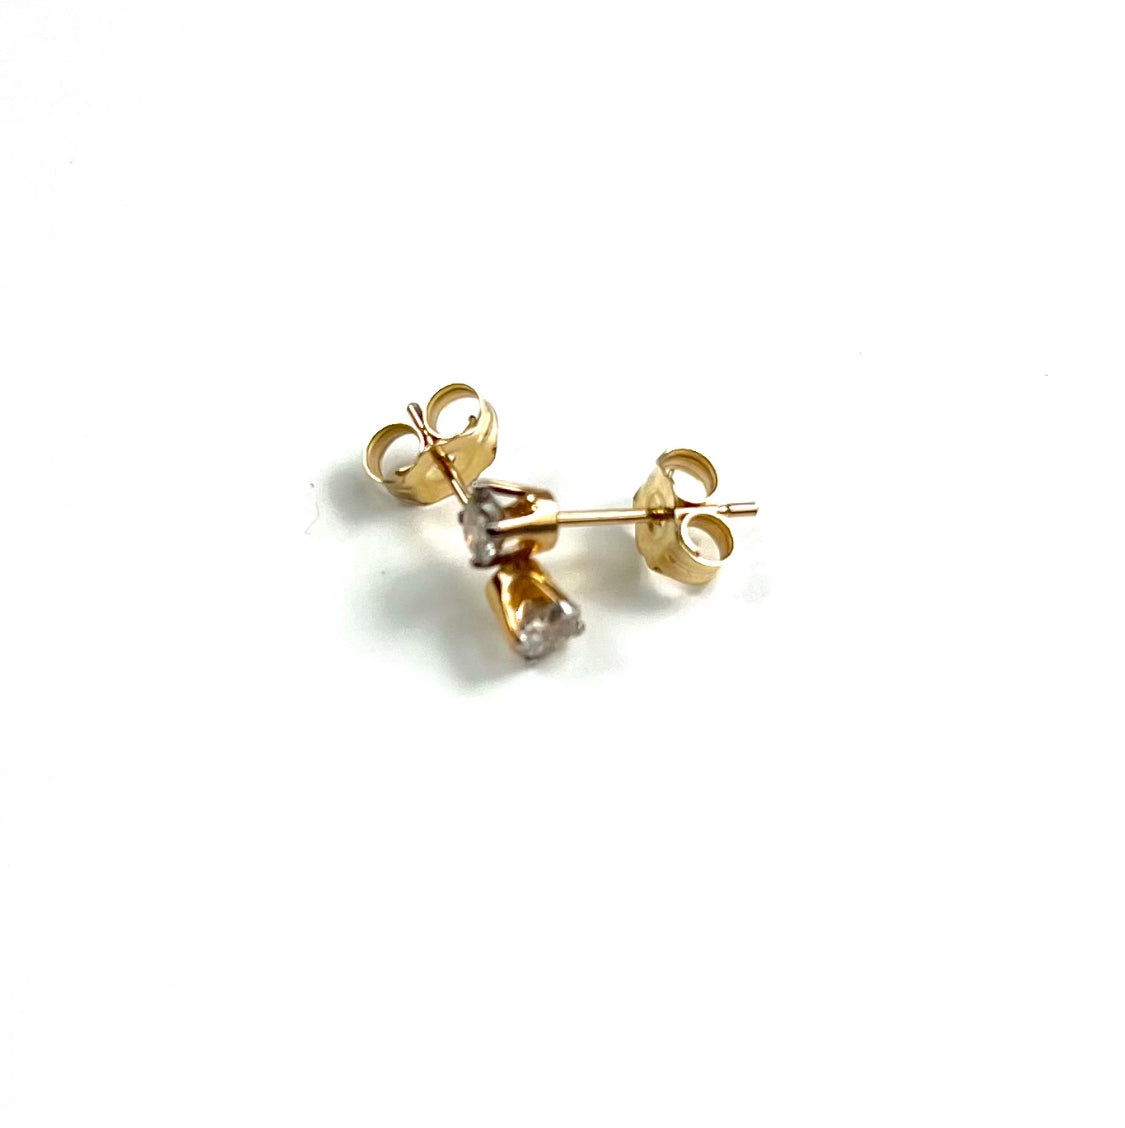 1/3ct TW Round Diamond Stud Earrings in 14K Yellow Gold